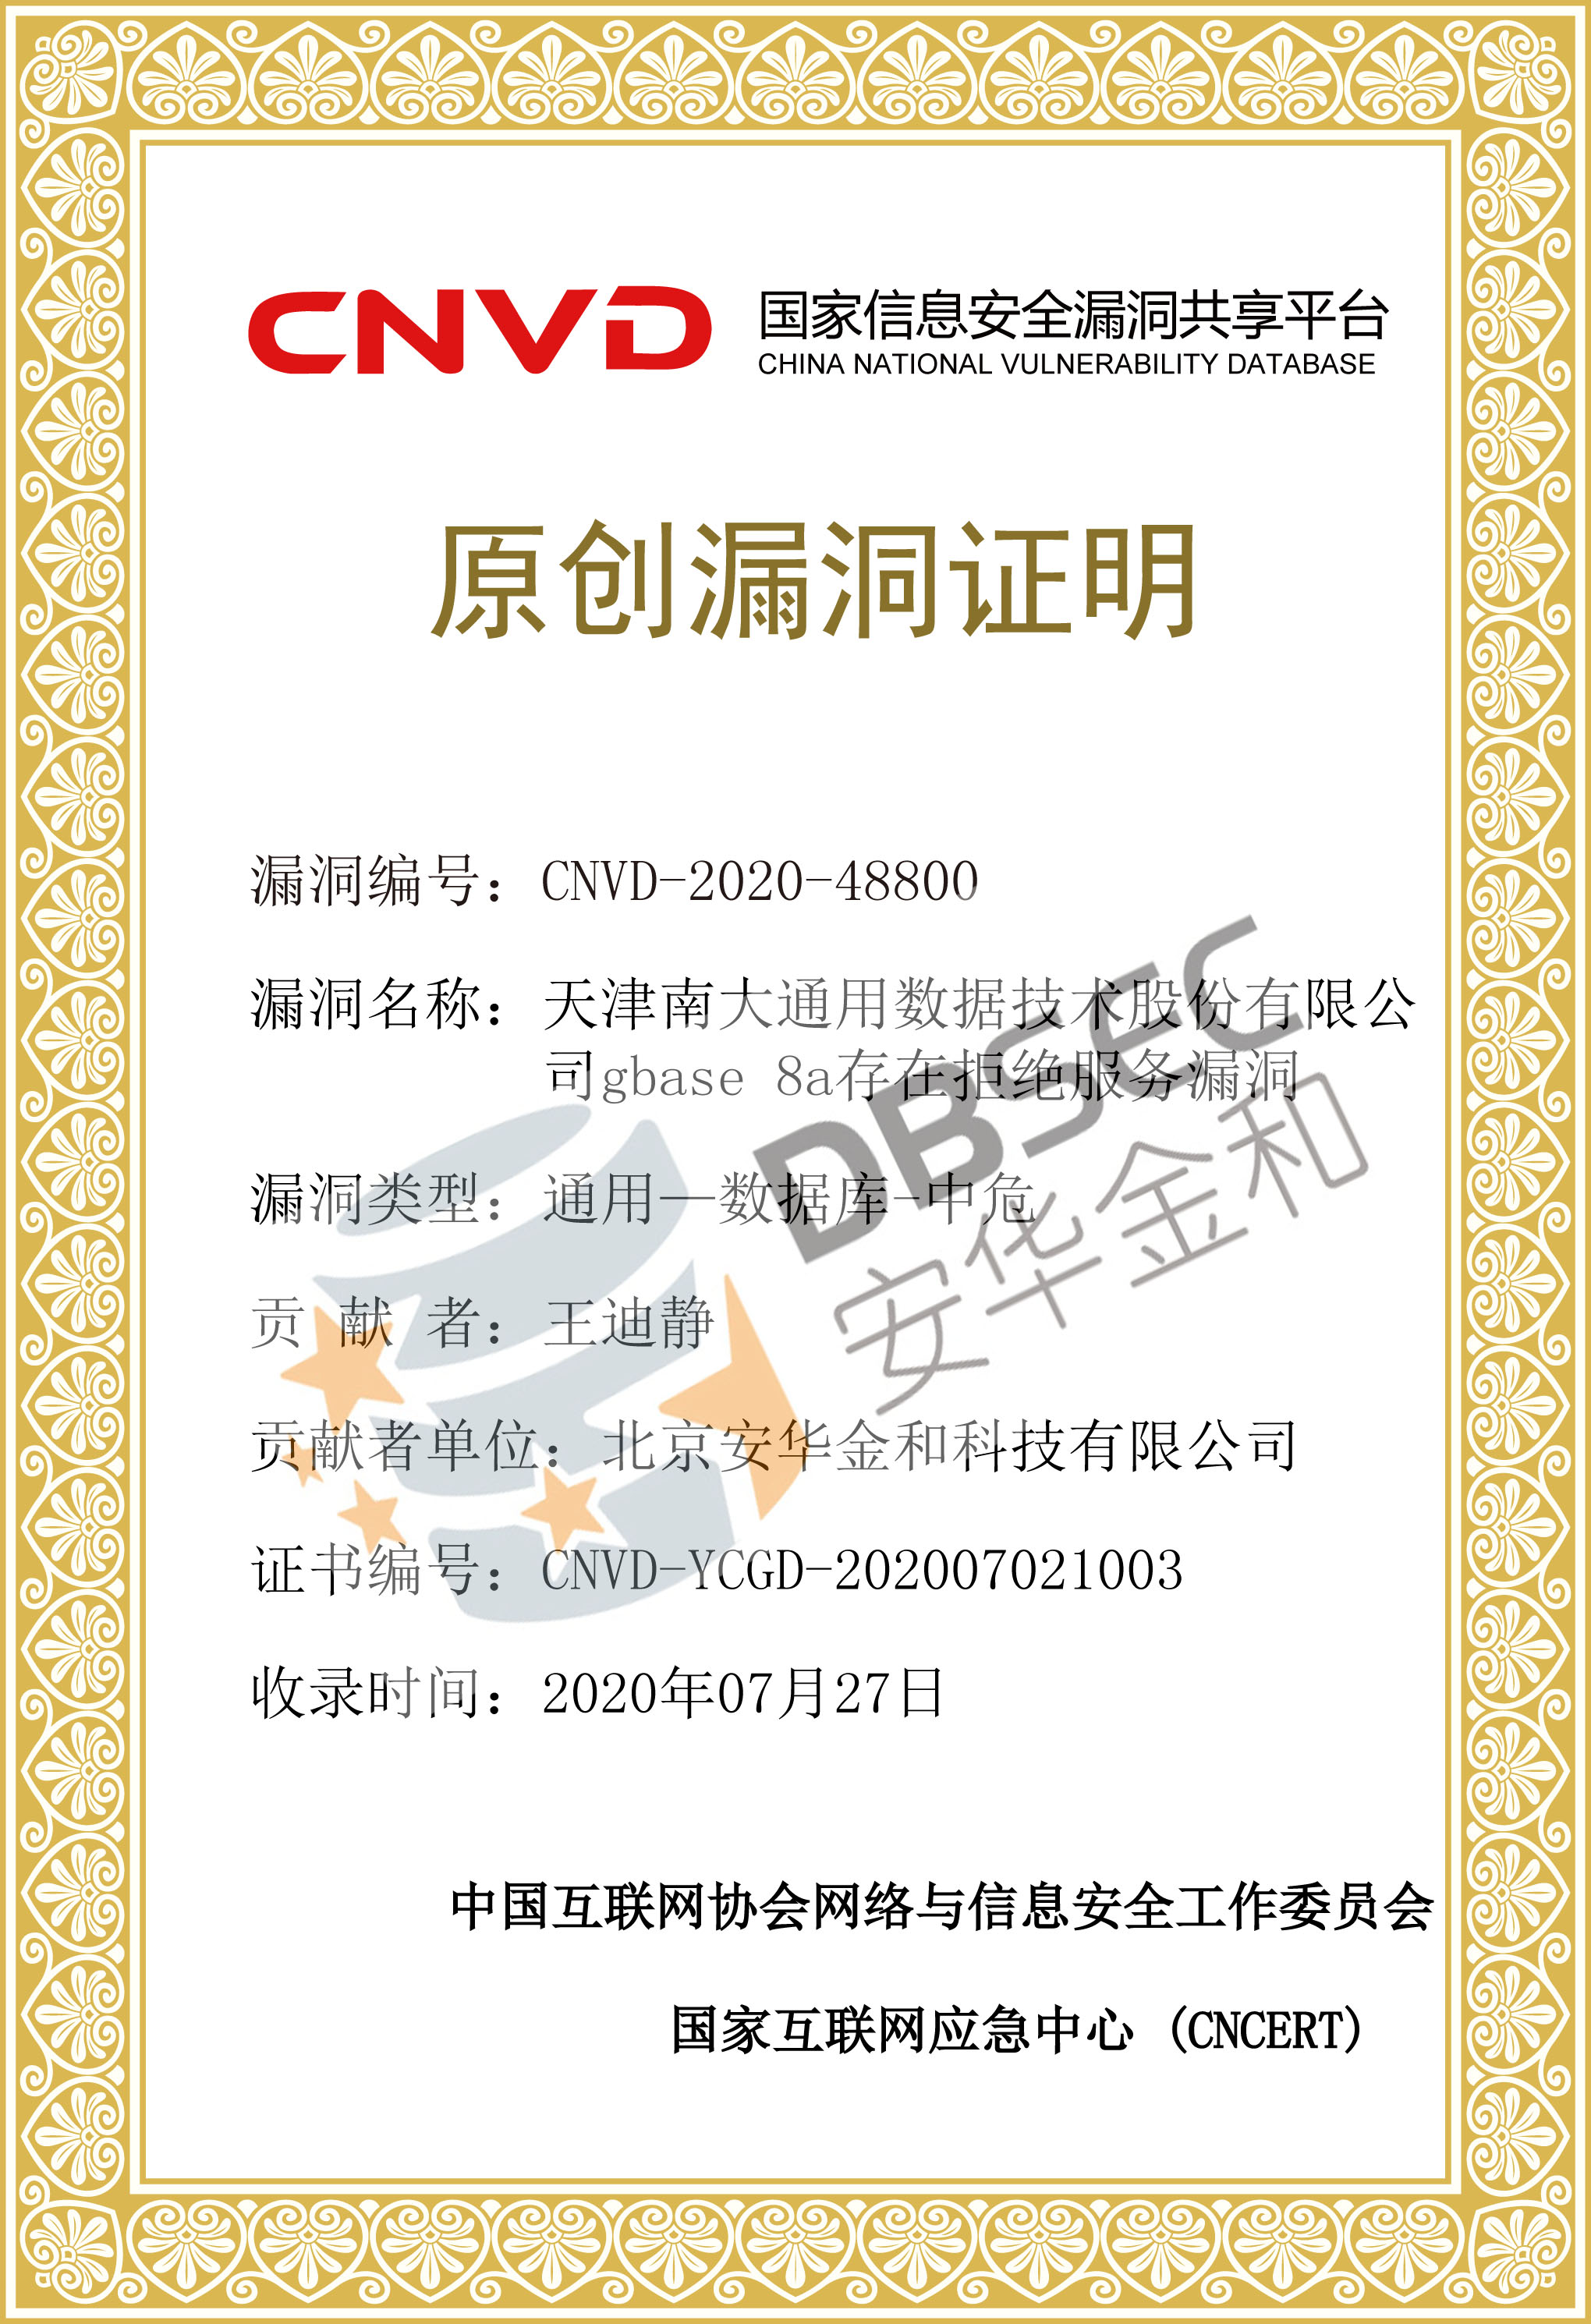 CNVD-YCGD-202007021003